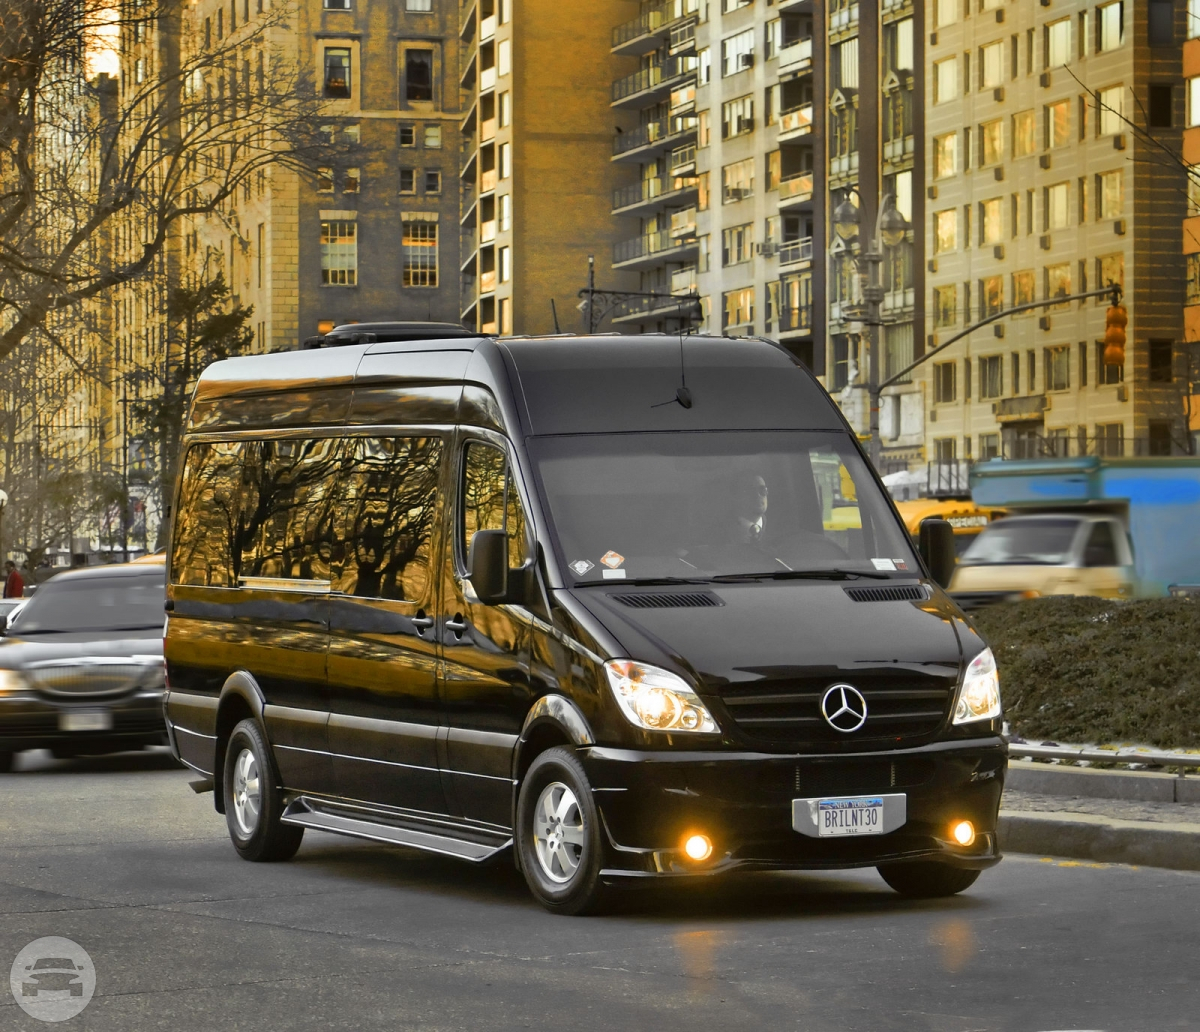 Luxury Mercedes Sprinter Van
Van /
New York, NY

 / Hourly $0.00
